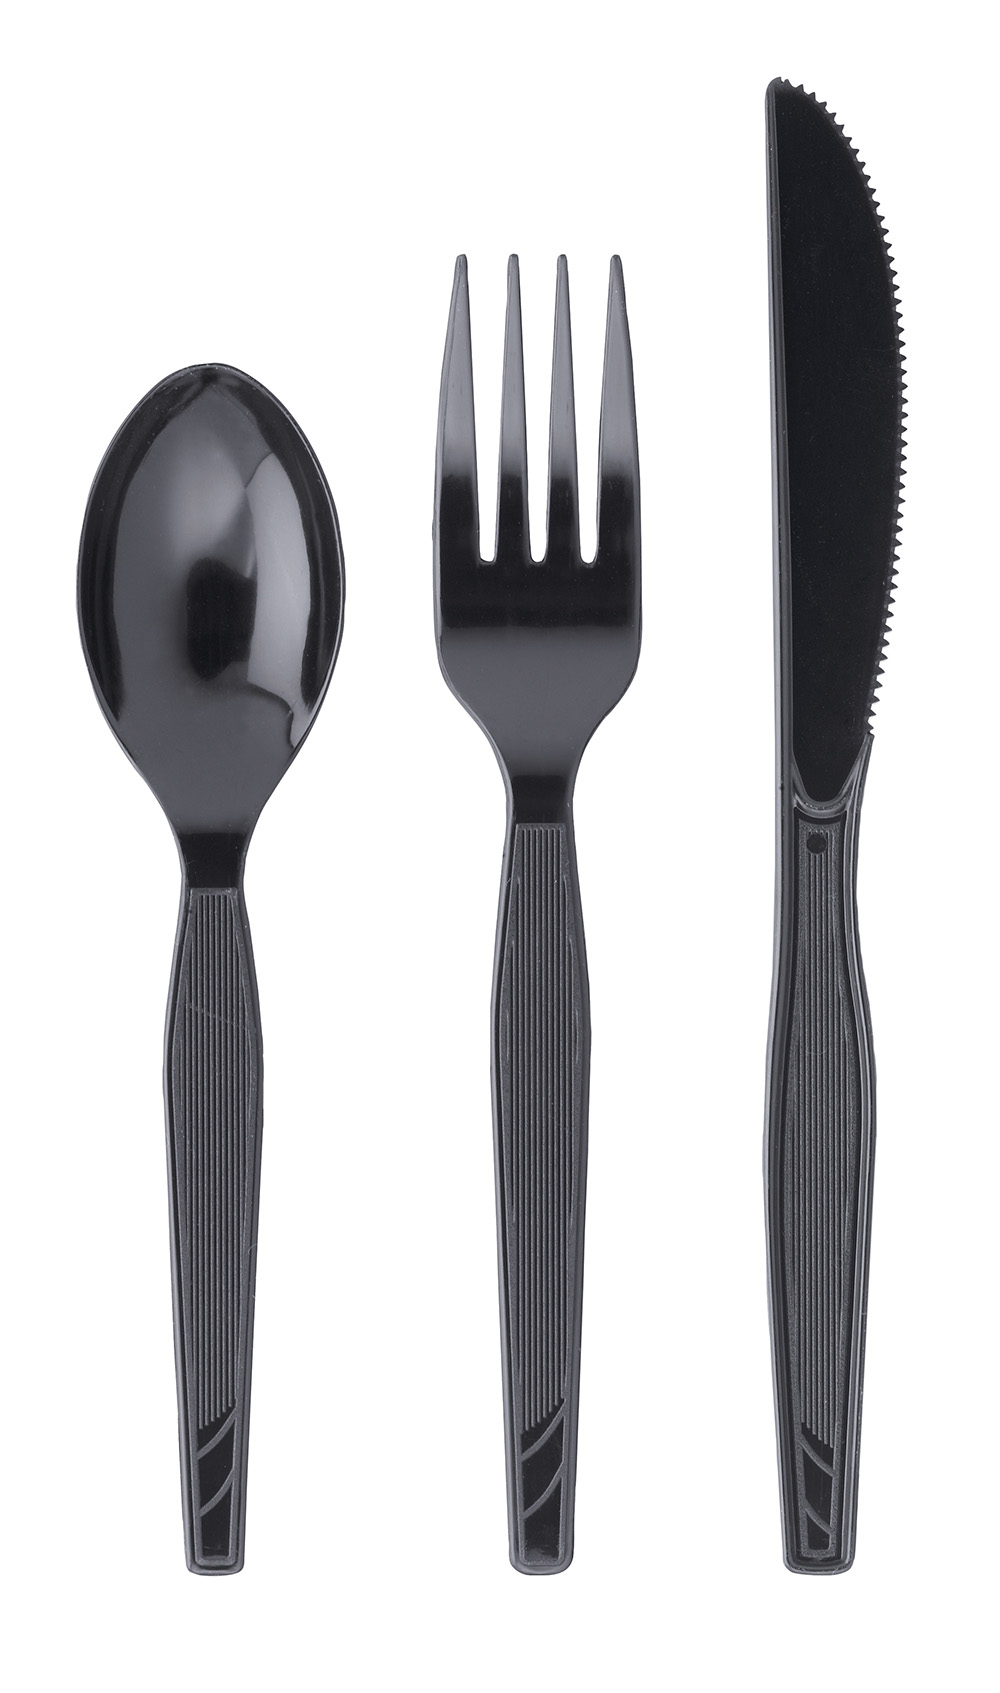 example of utensils